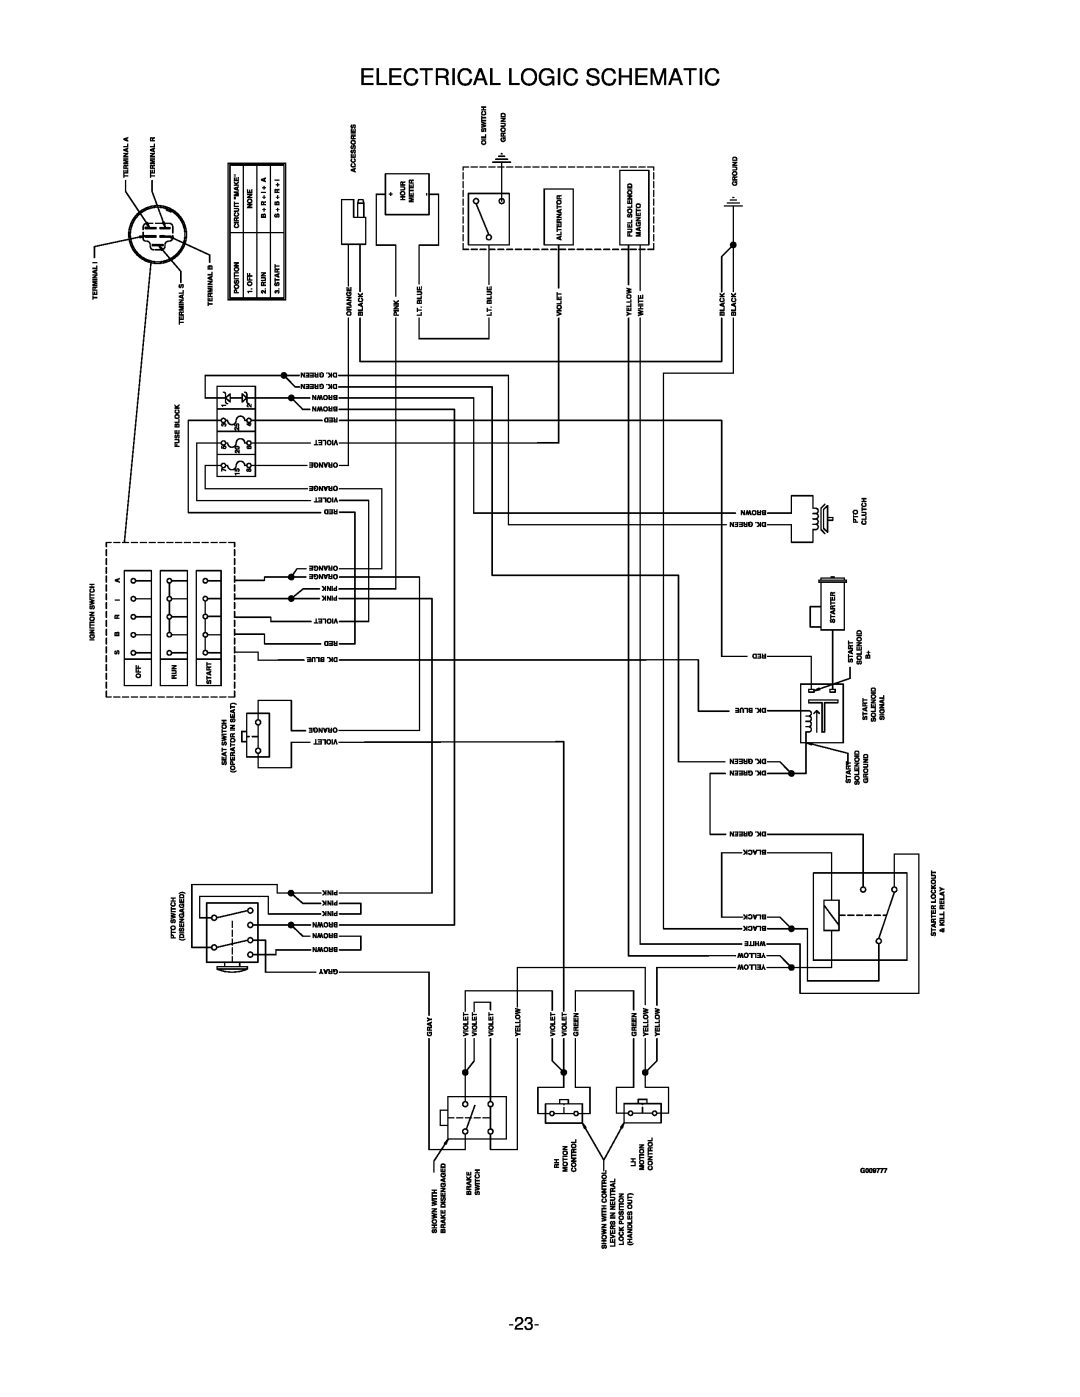 Exmark 4500-451 manual Electrical Logic Schematic 